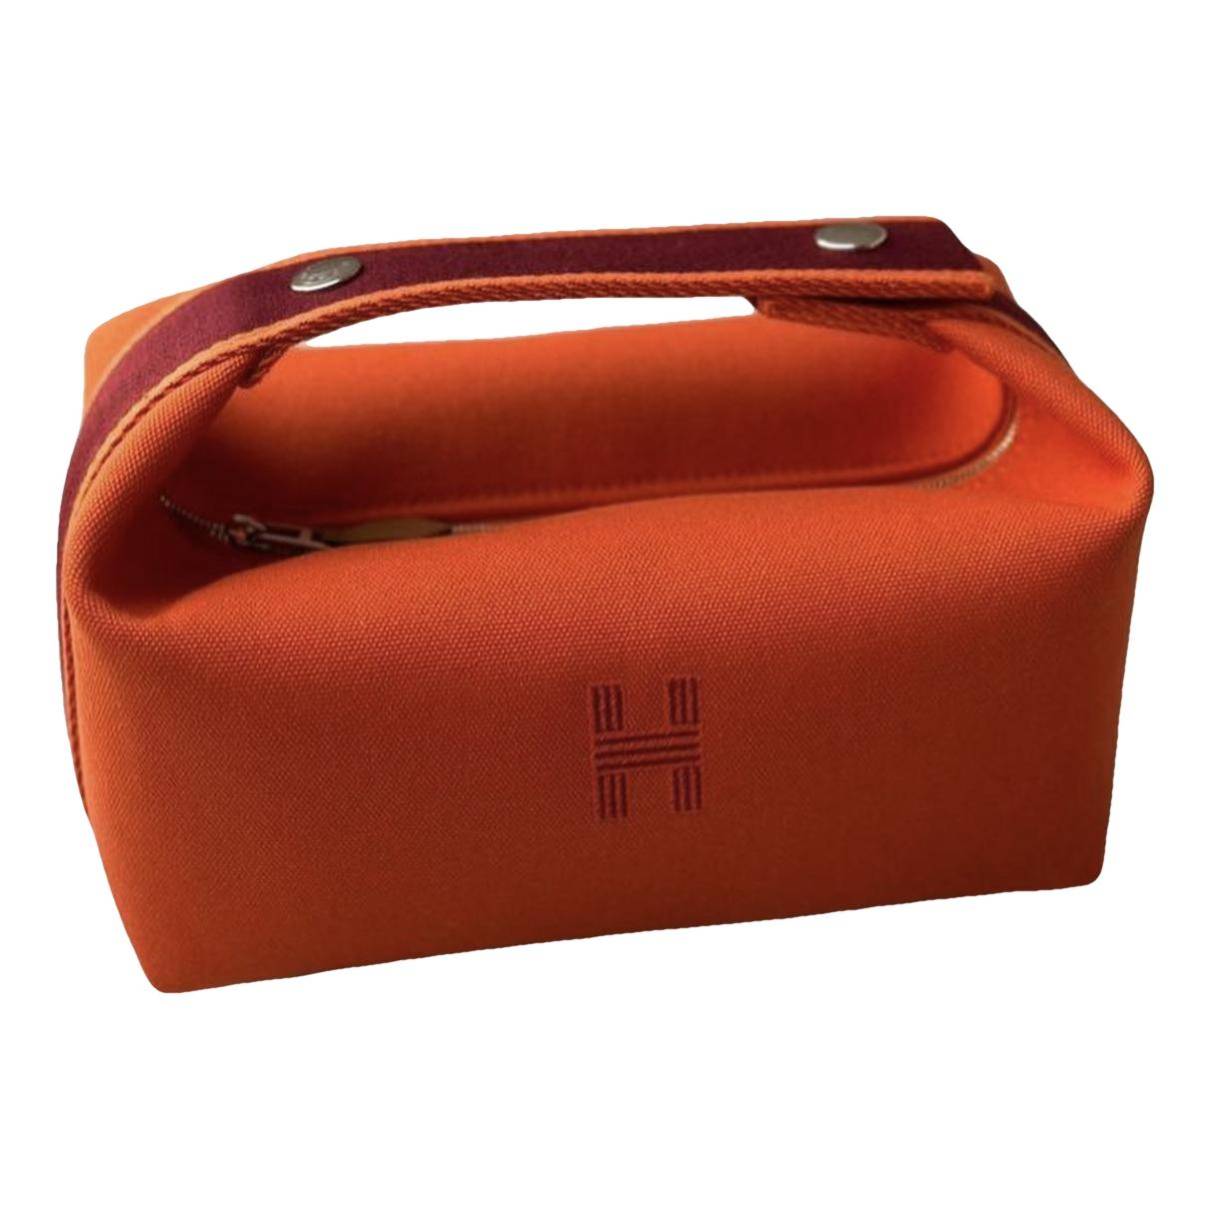 Hermes Orange Bride-a-Brac case, small model